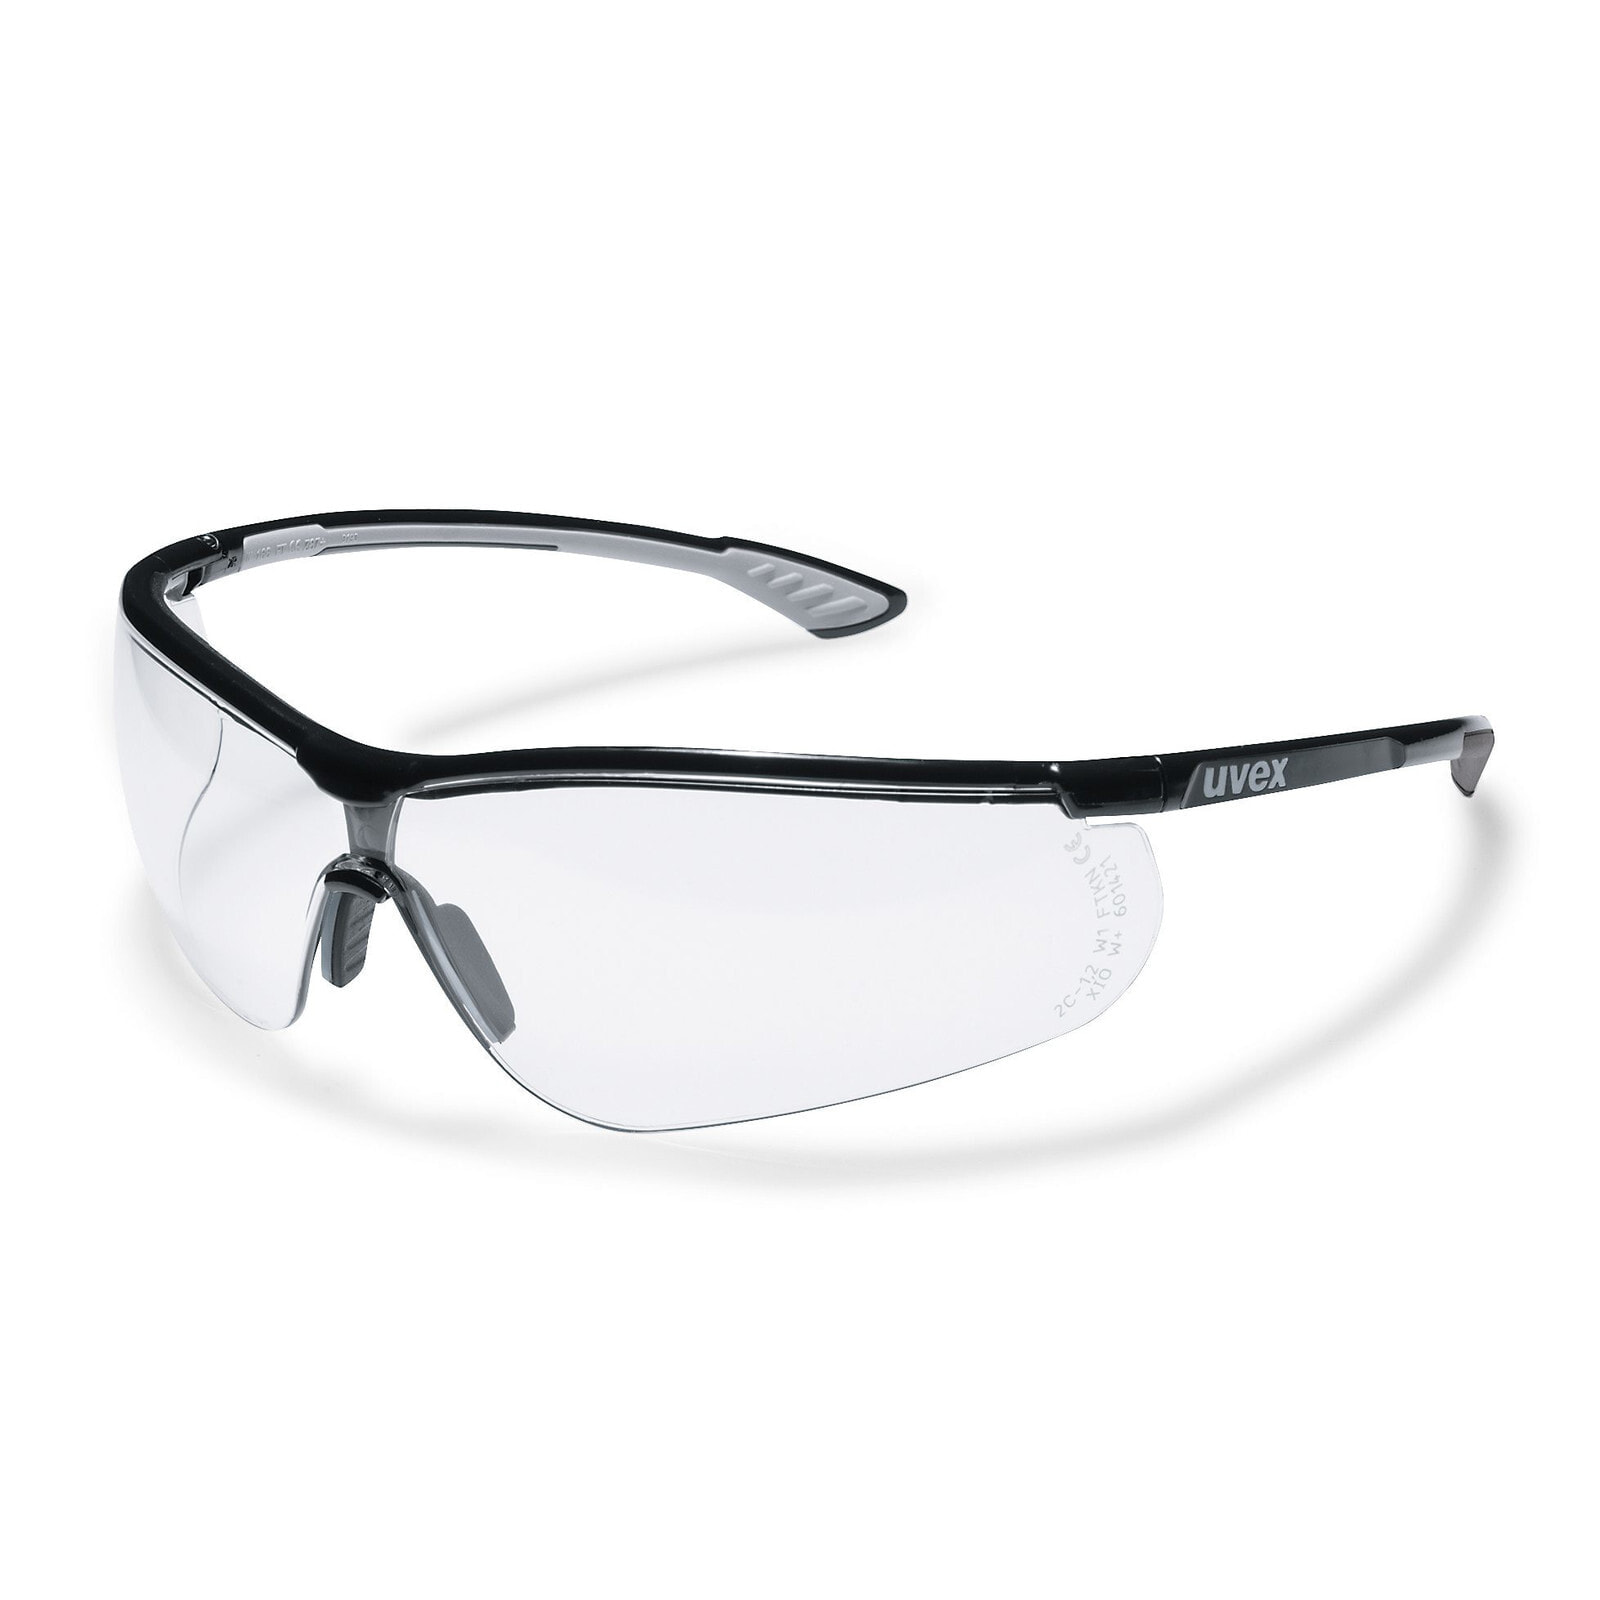 UVEX Arbeitsschutz 9193080 - Safety glasses - Grey - Black - Polycarbonate - 1 pc(s)